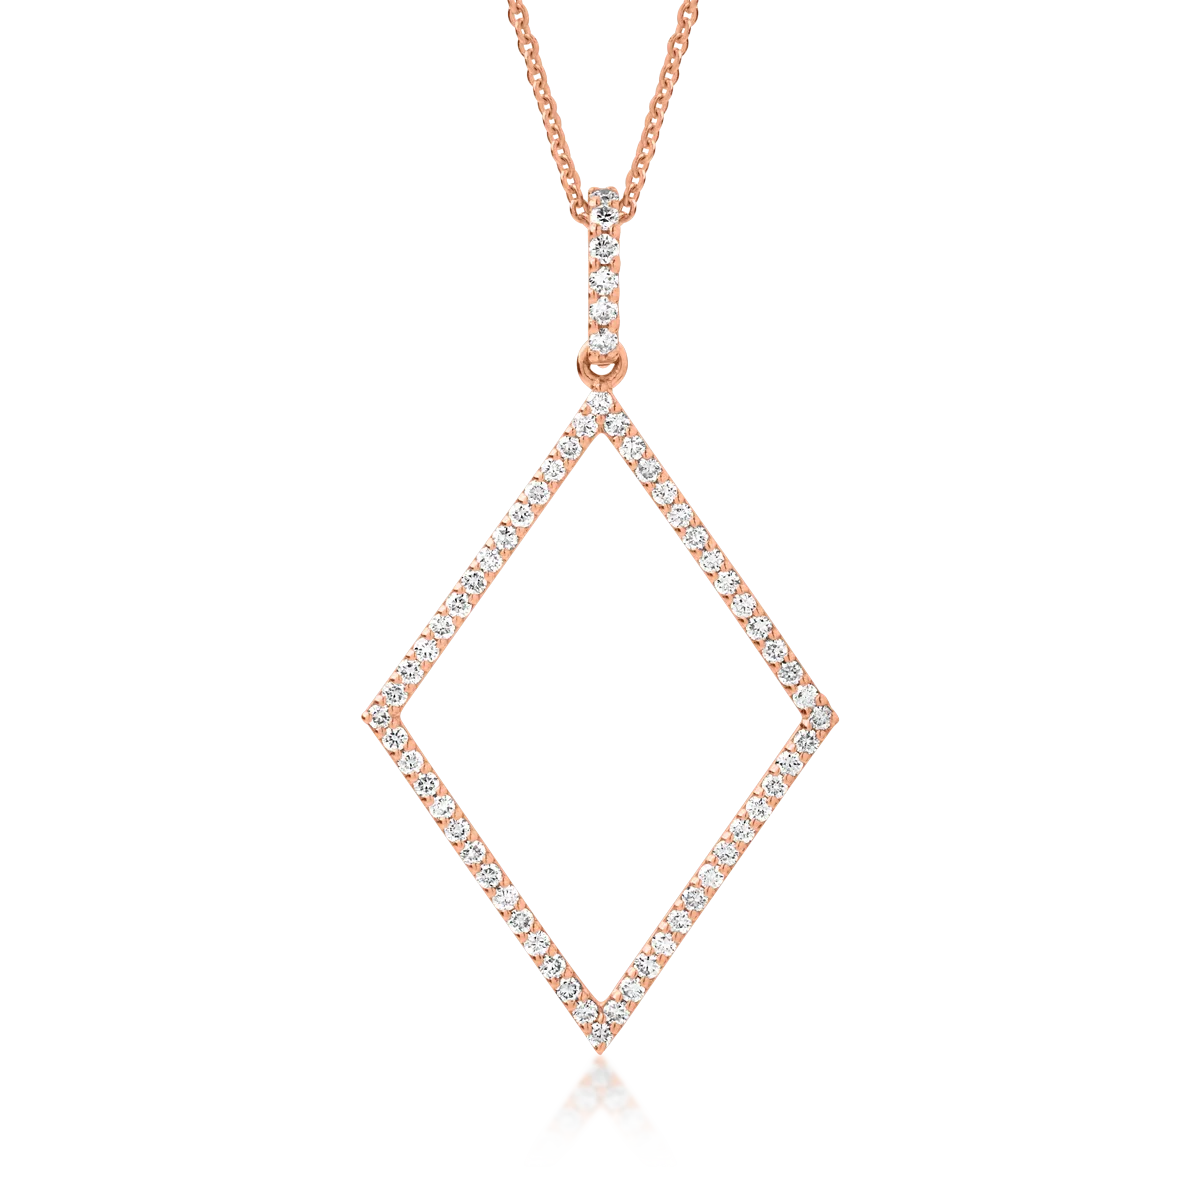 18K rose gold geometric pendant necklace with 0.54ct diamonds